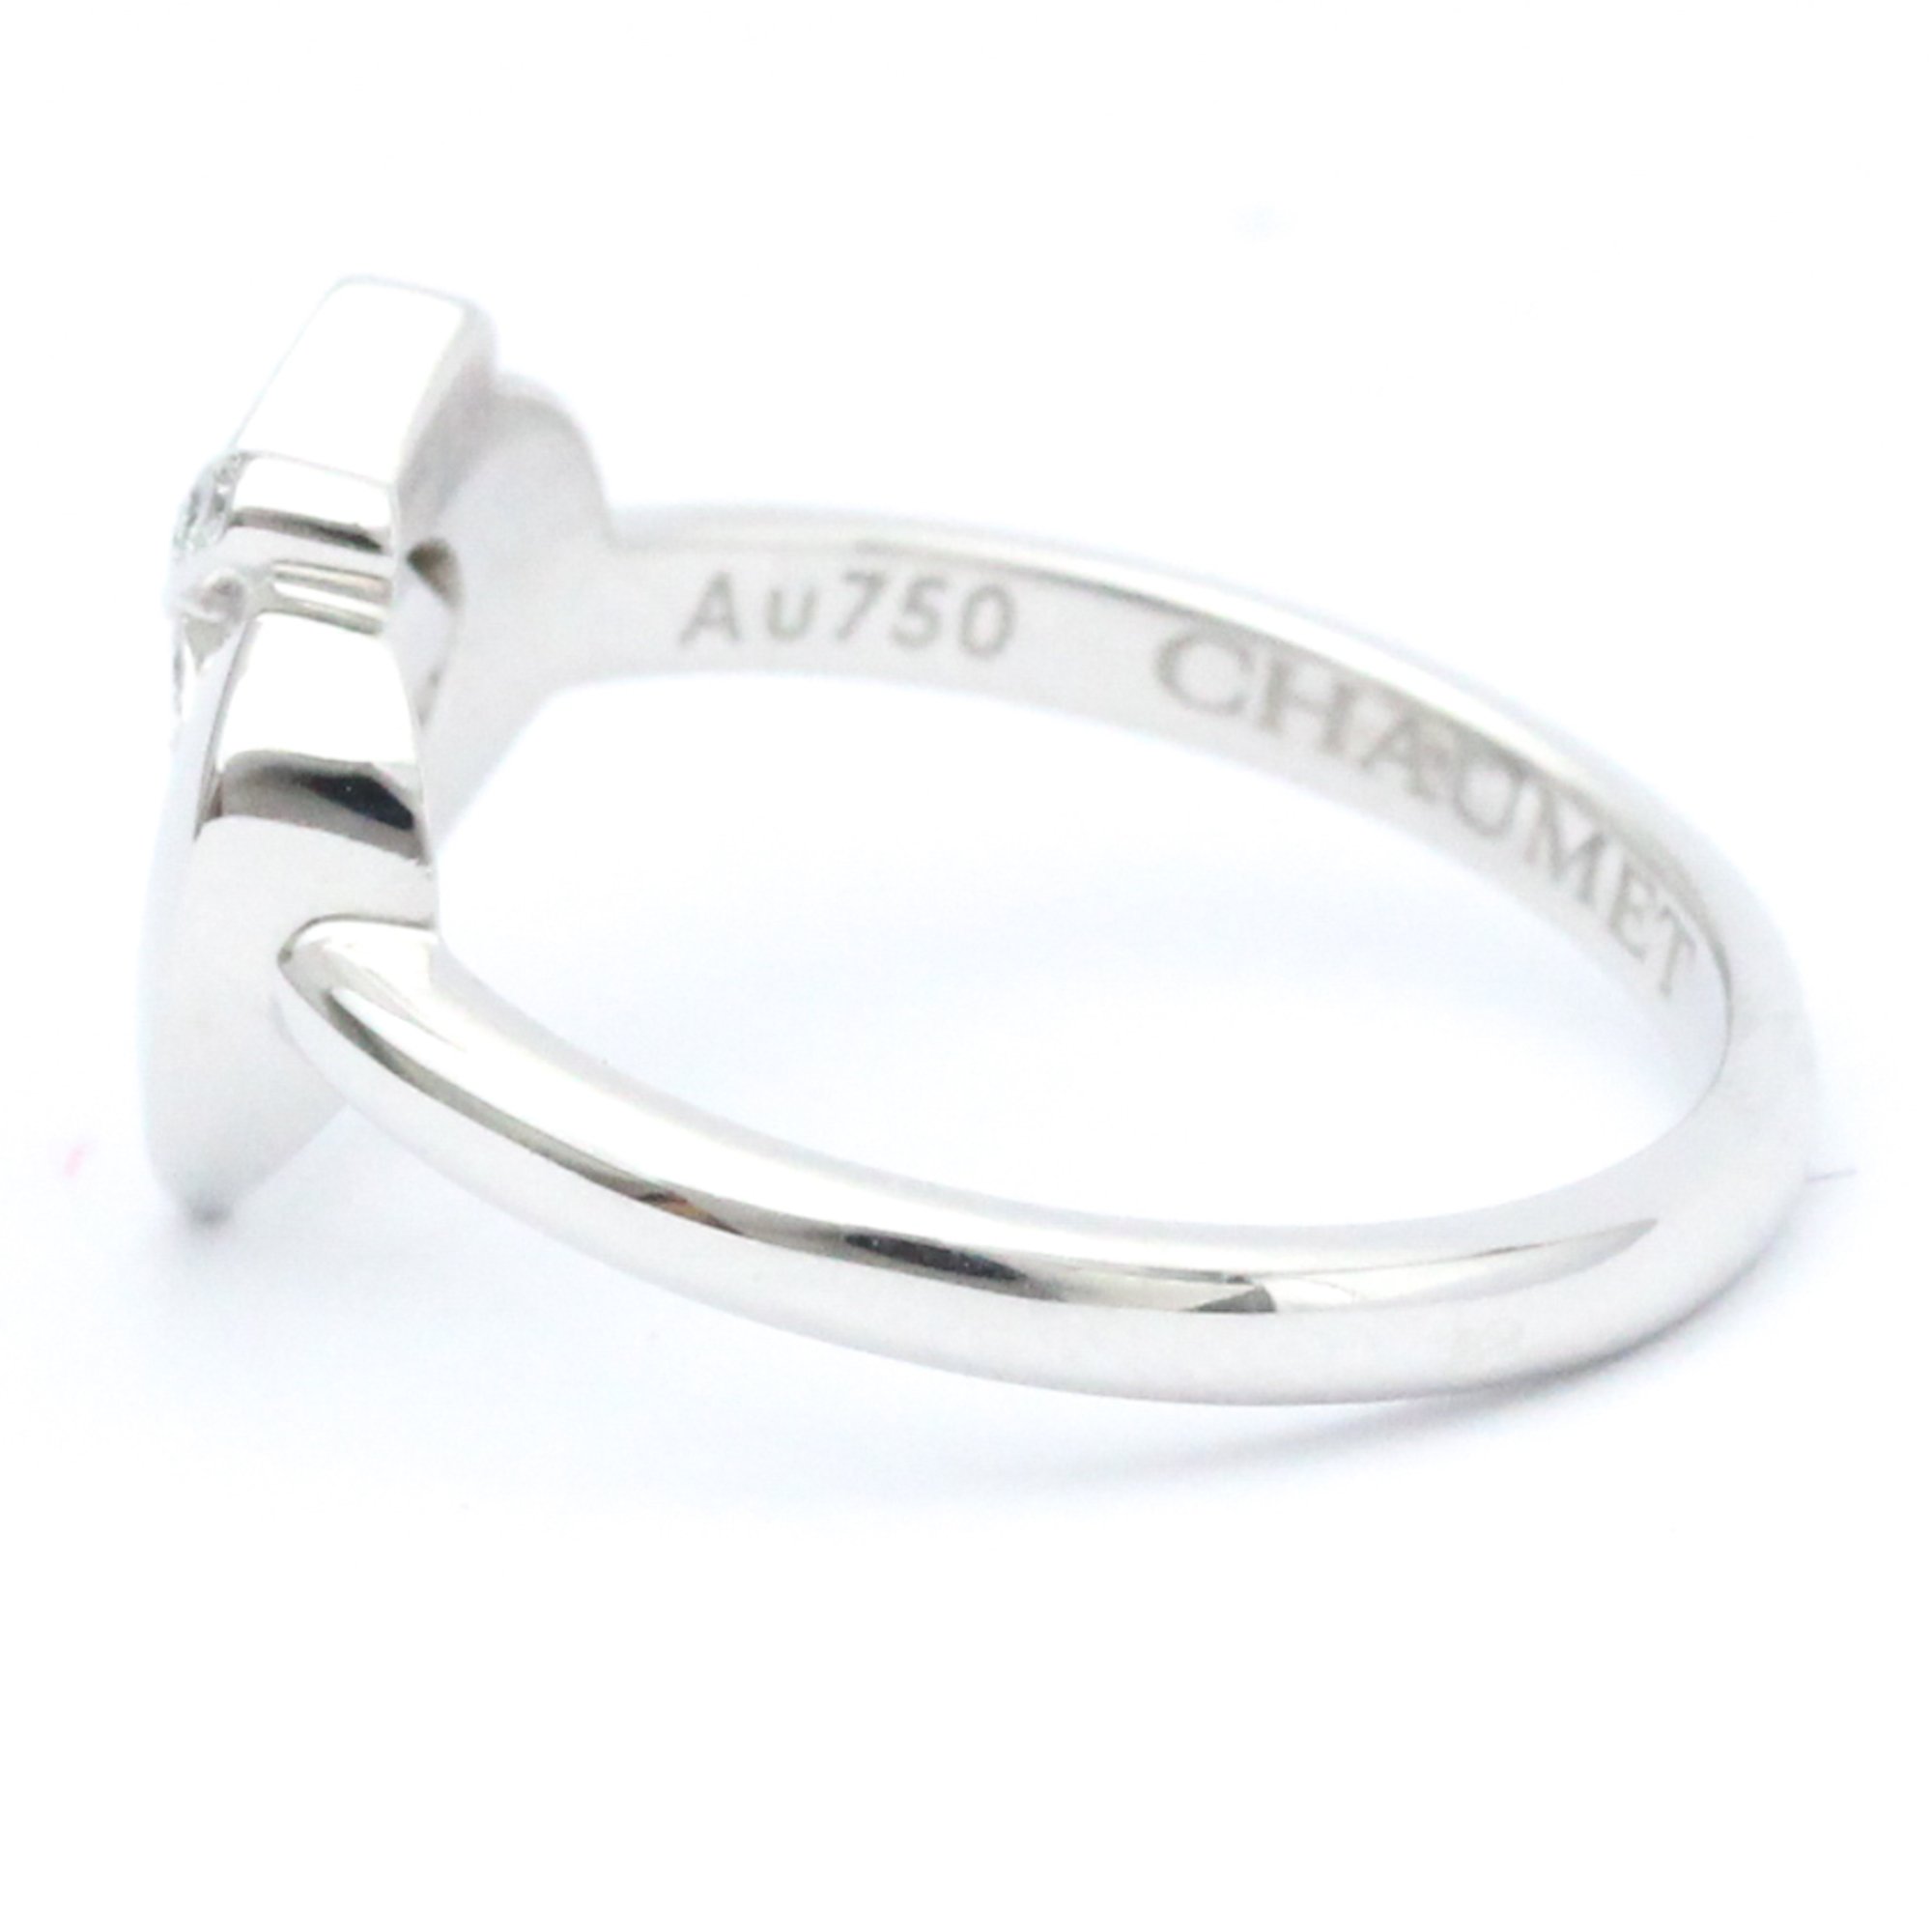 Chaumet Lian Diamond Ring White Gold (18K) Fashion Diamond Band Ring Silver